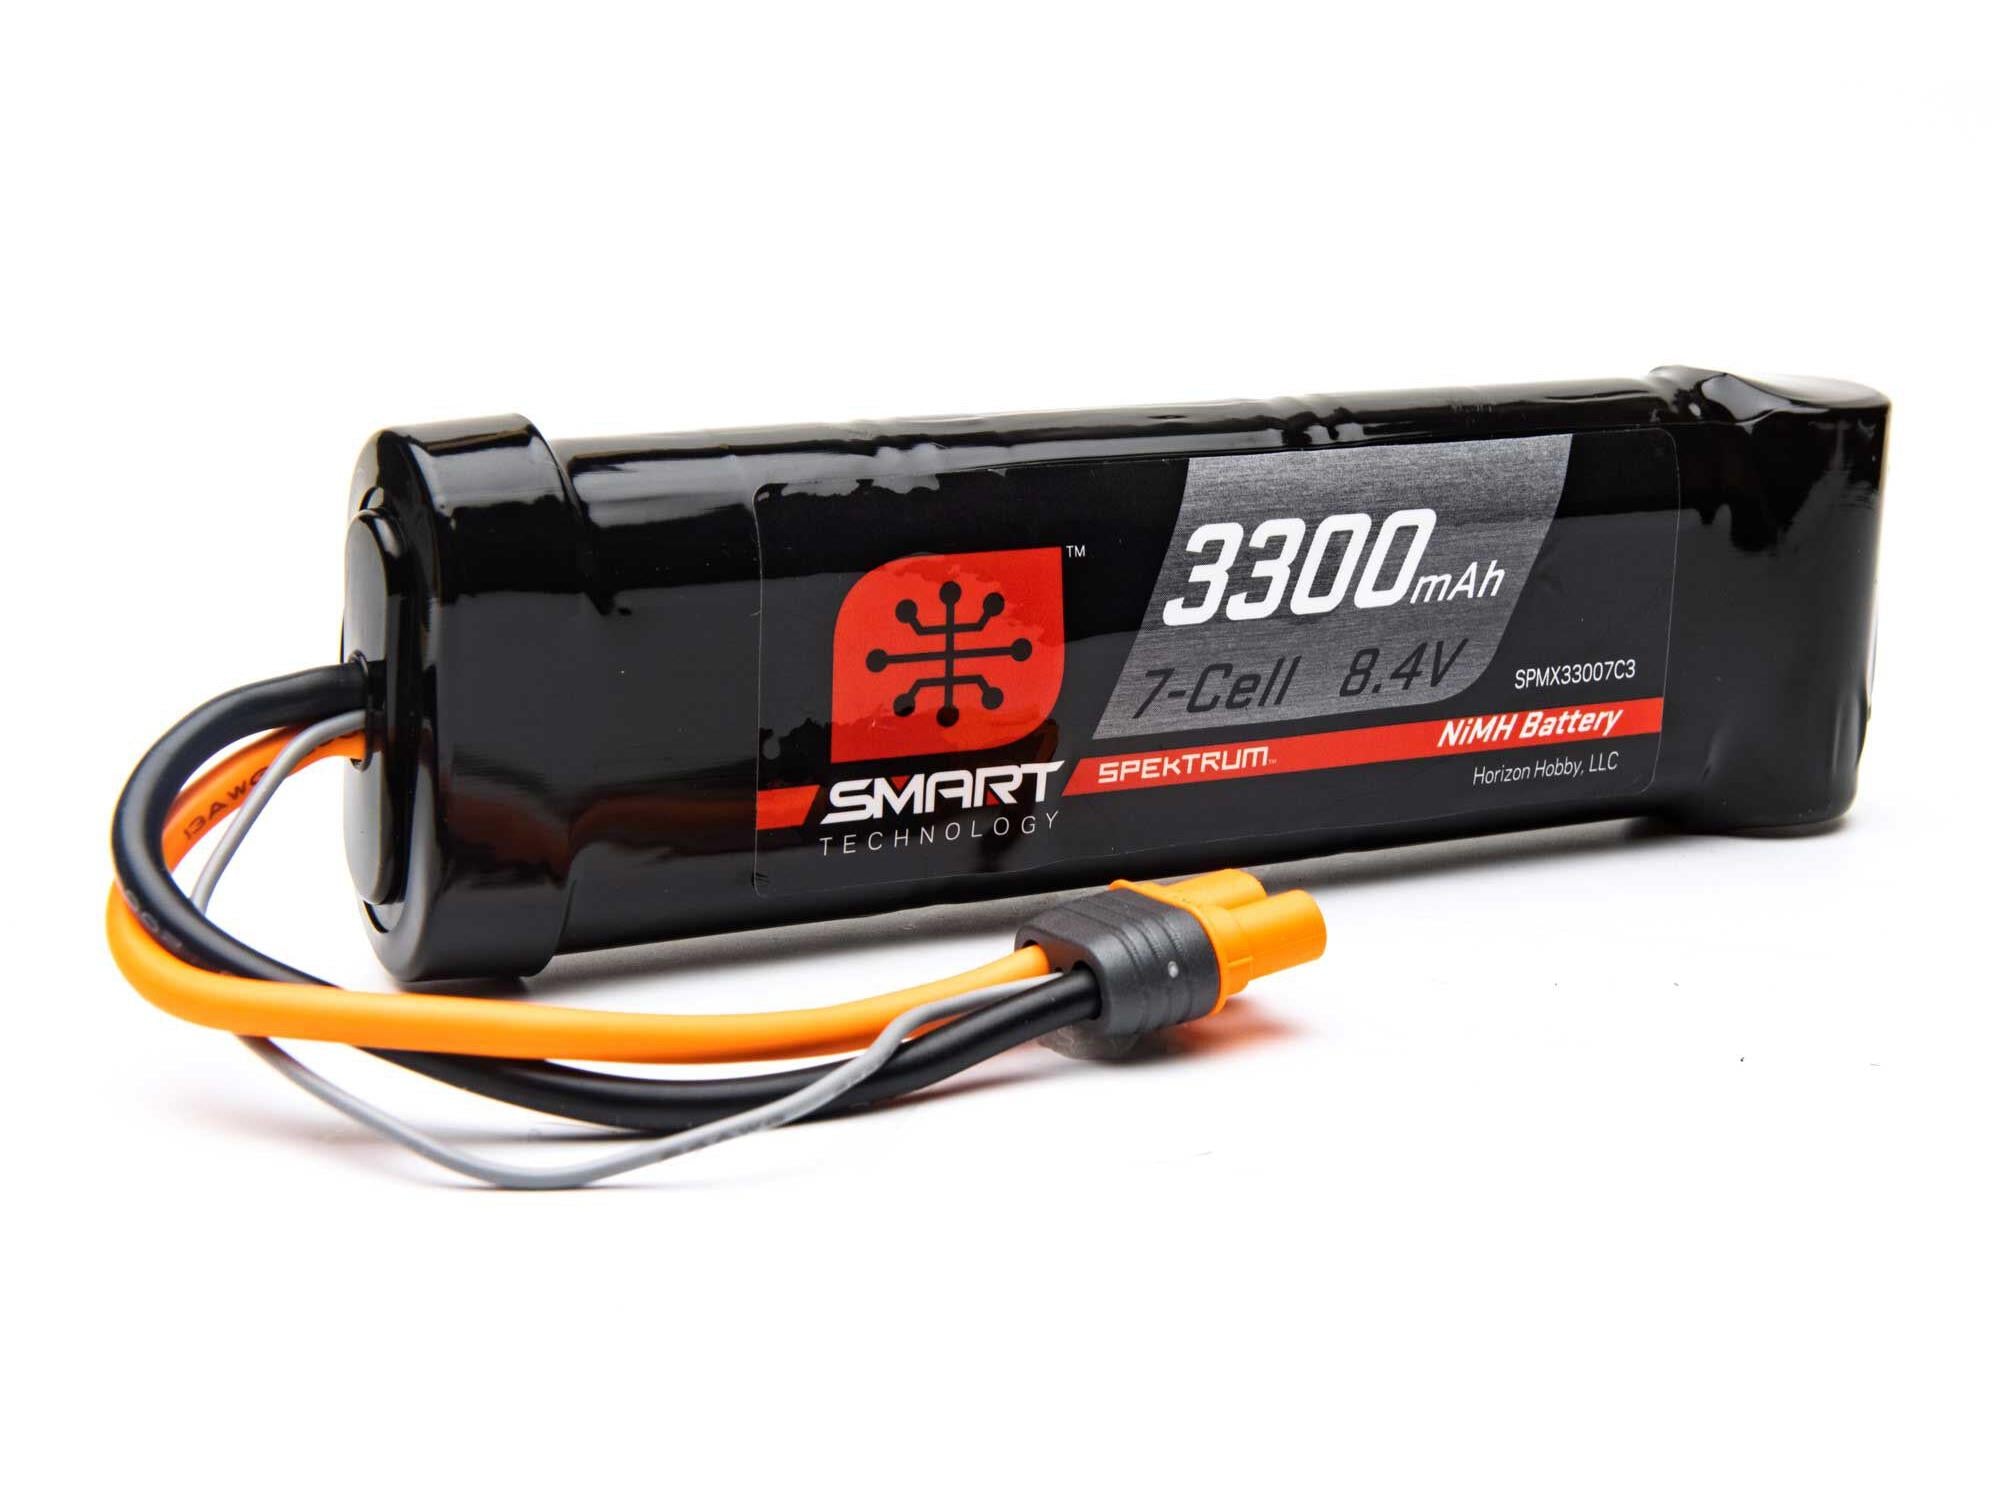 Spektrum 3300mAh 7-Cell 8.4V Smart NiMH Battery  IC3 SPMX33007C3